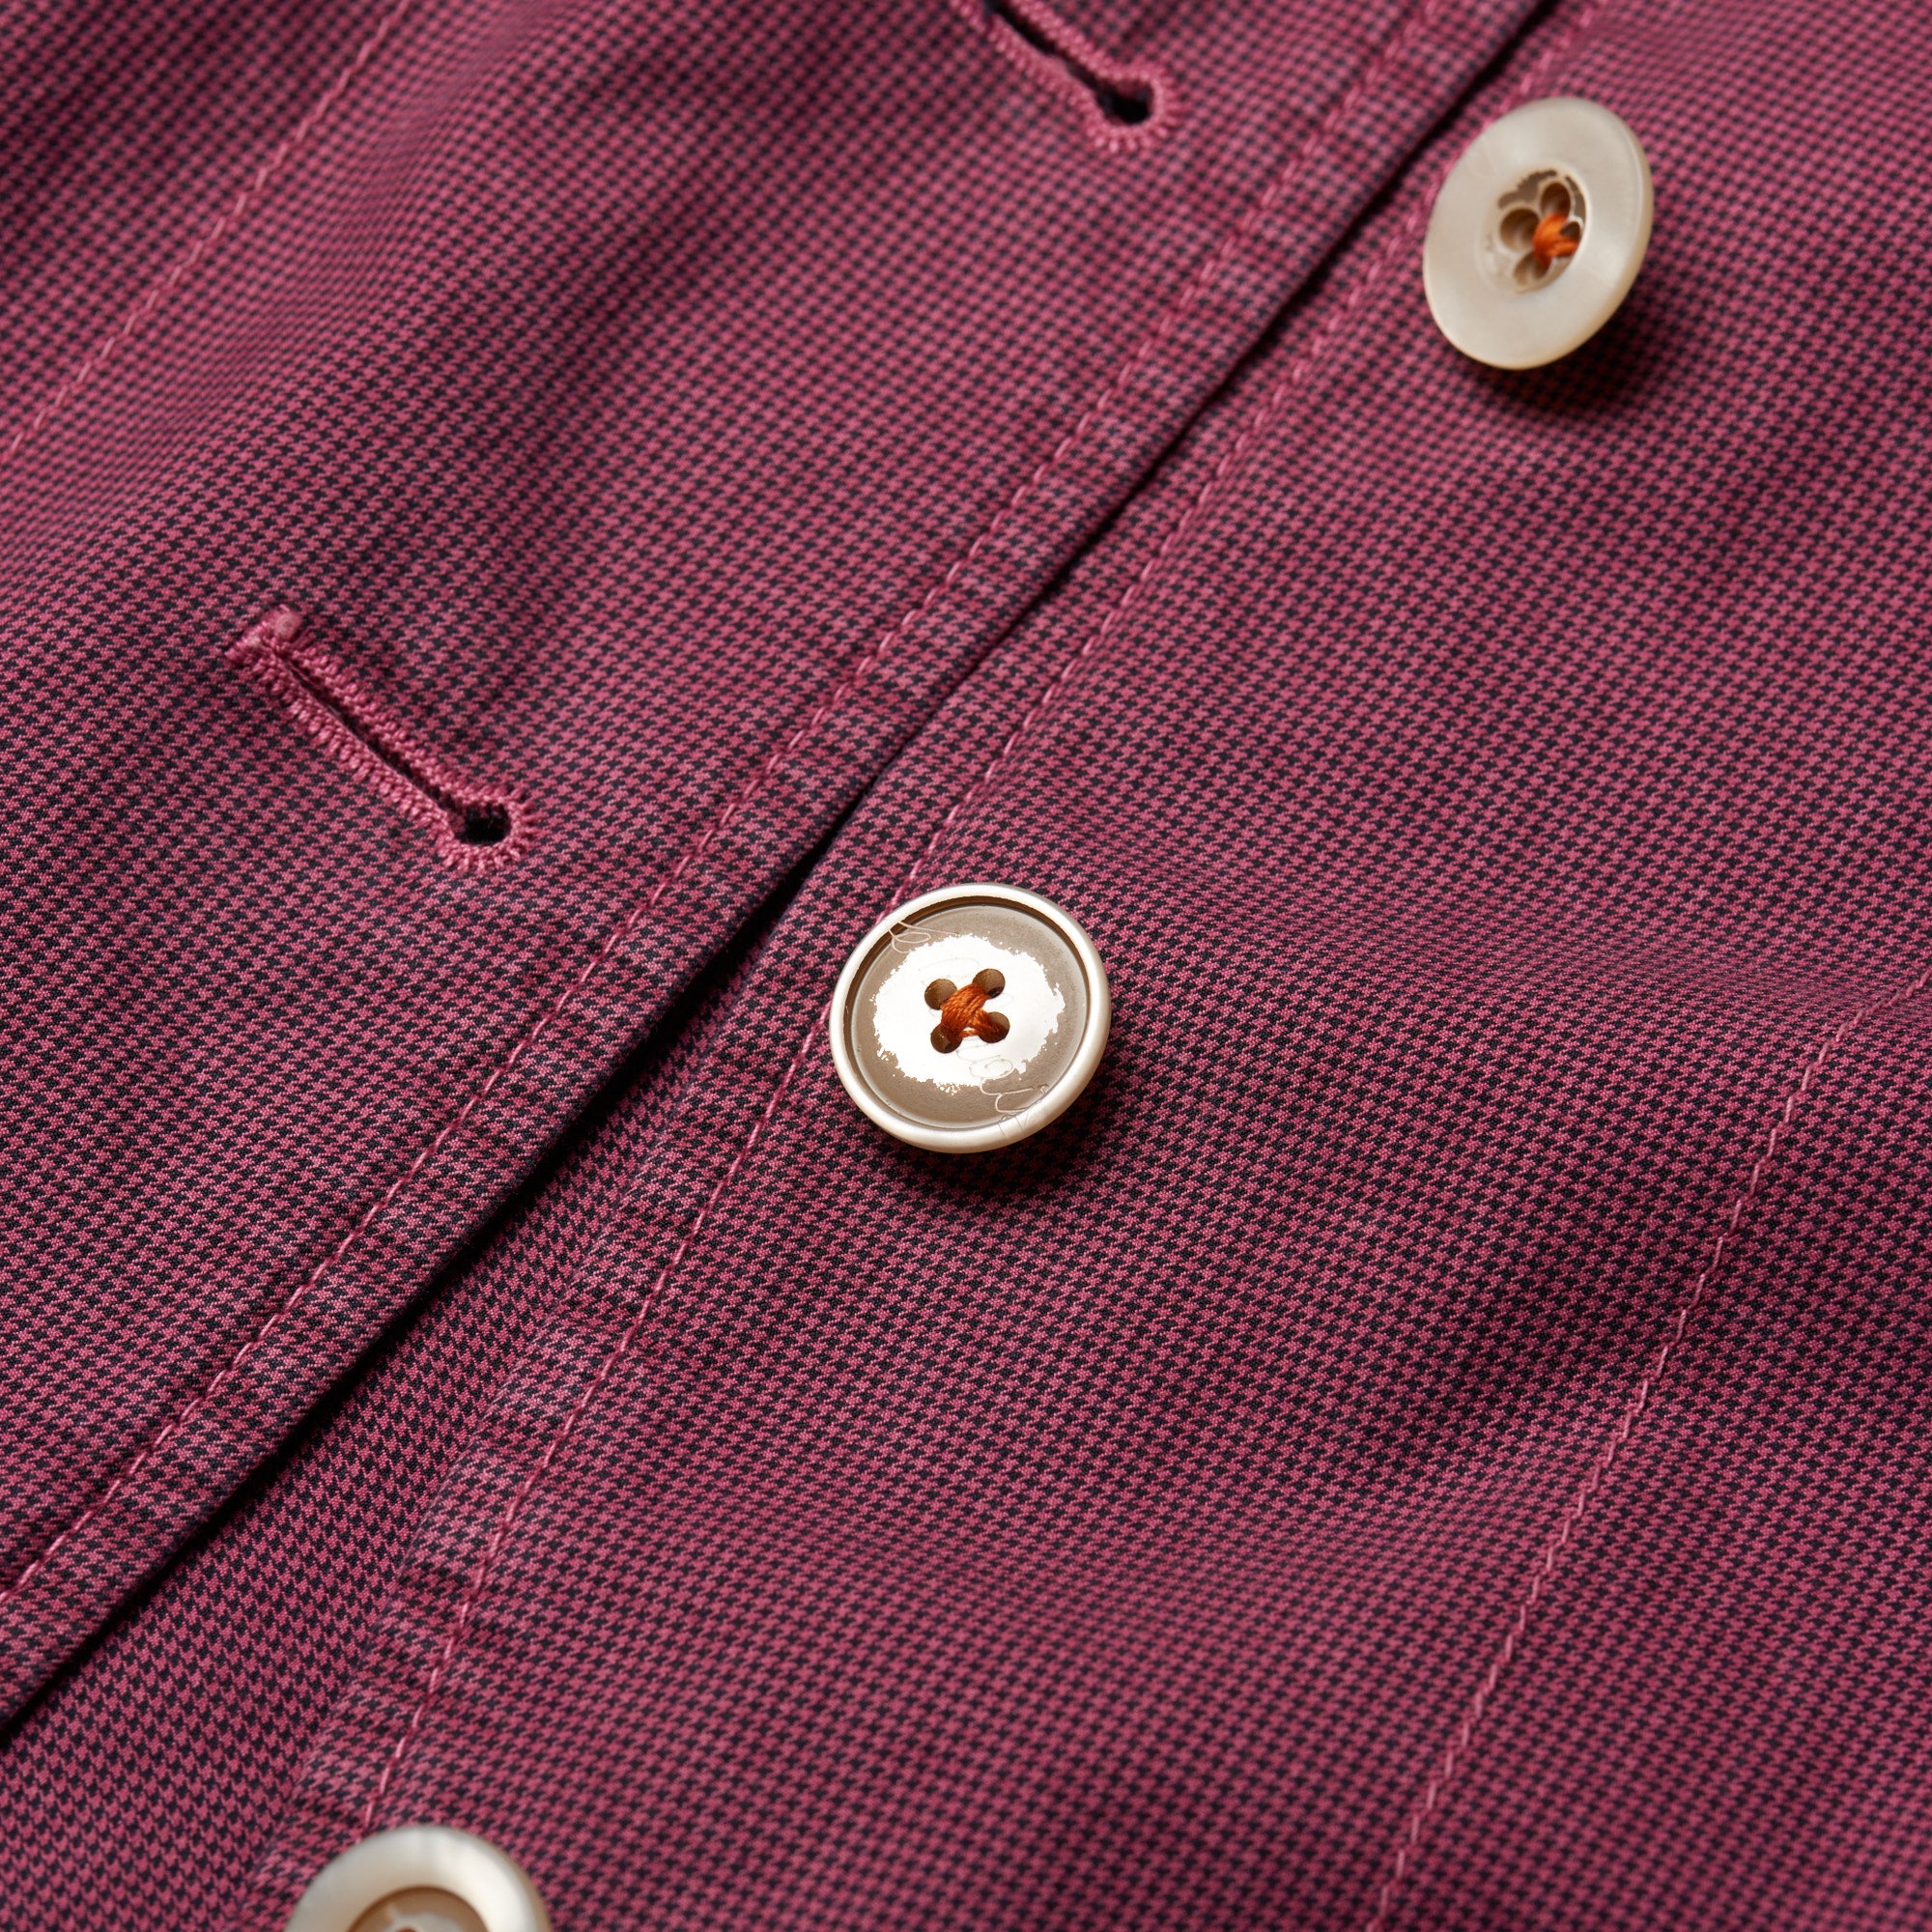 BOGLIOLI Milano "Vivy" Dark Pink Houndstooth Cotton Women Jacket EU 42 NEW US S WOMEN'S BOUTIQUE